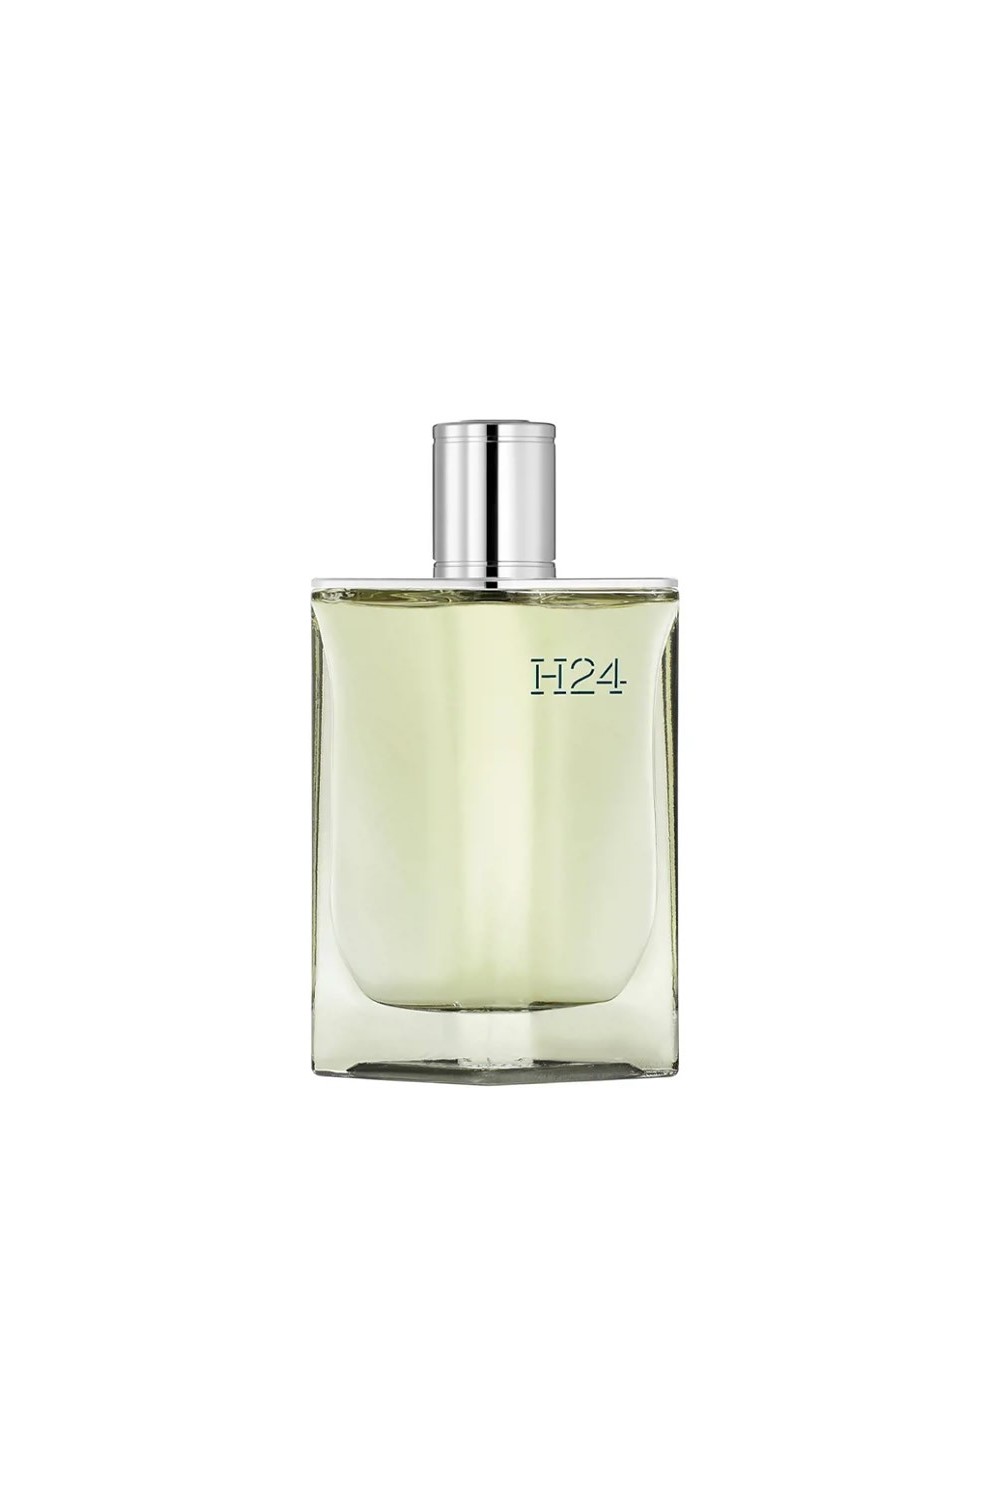 HERMÈS - Hermès H24 Eau De Parfum Spray 50ml